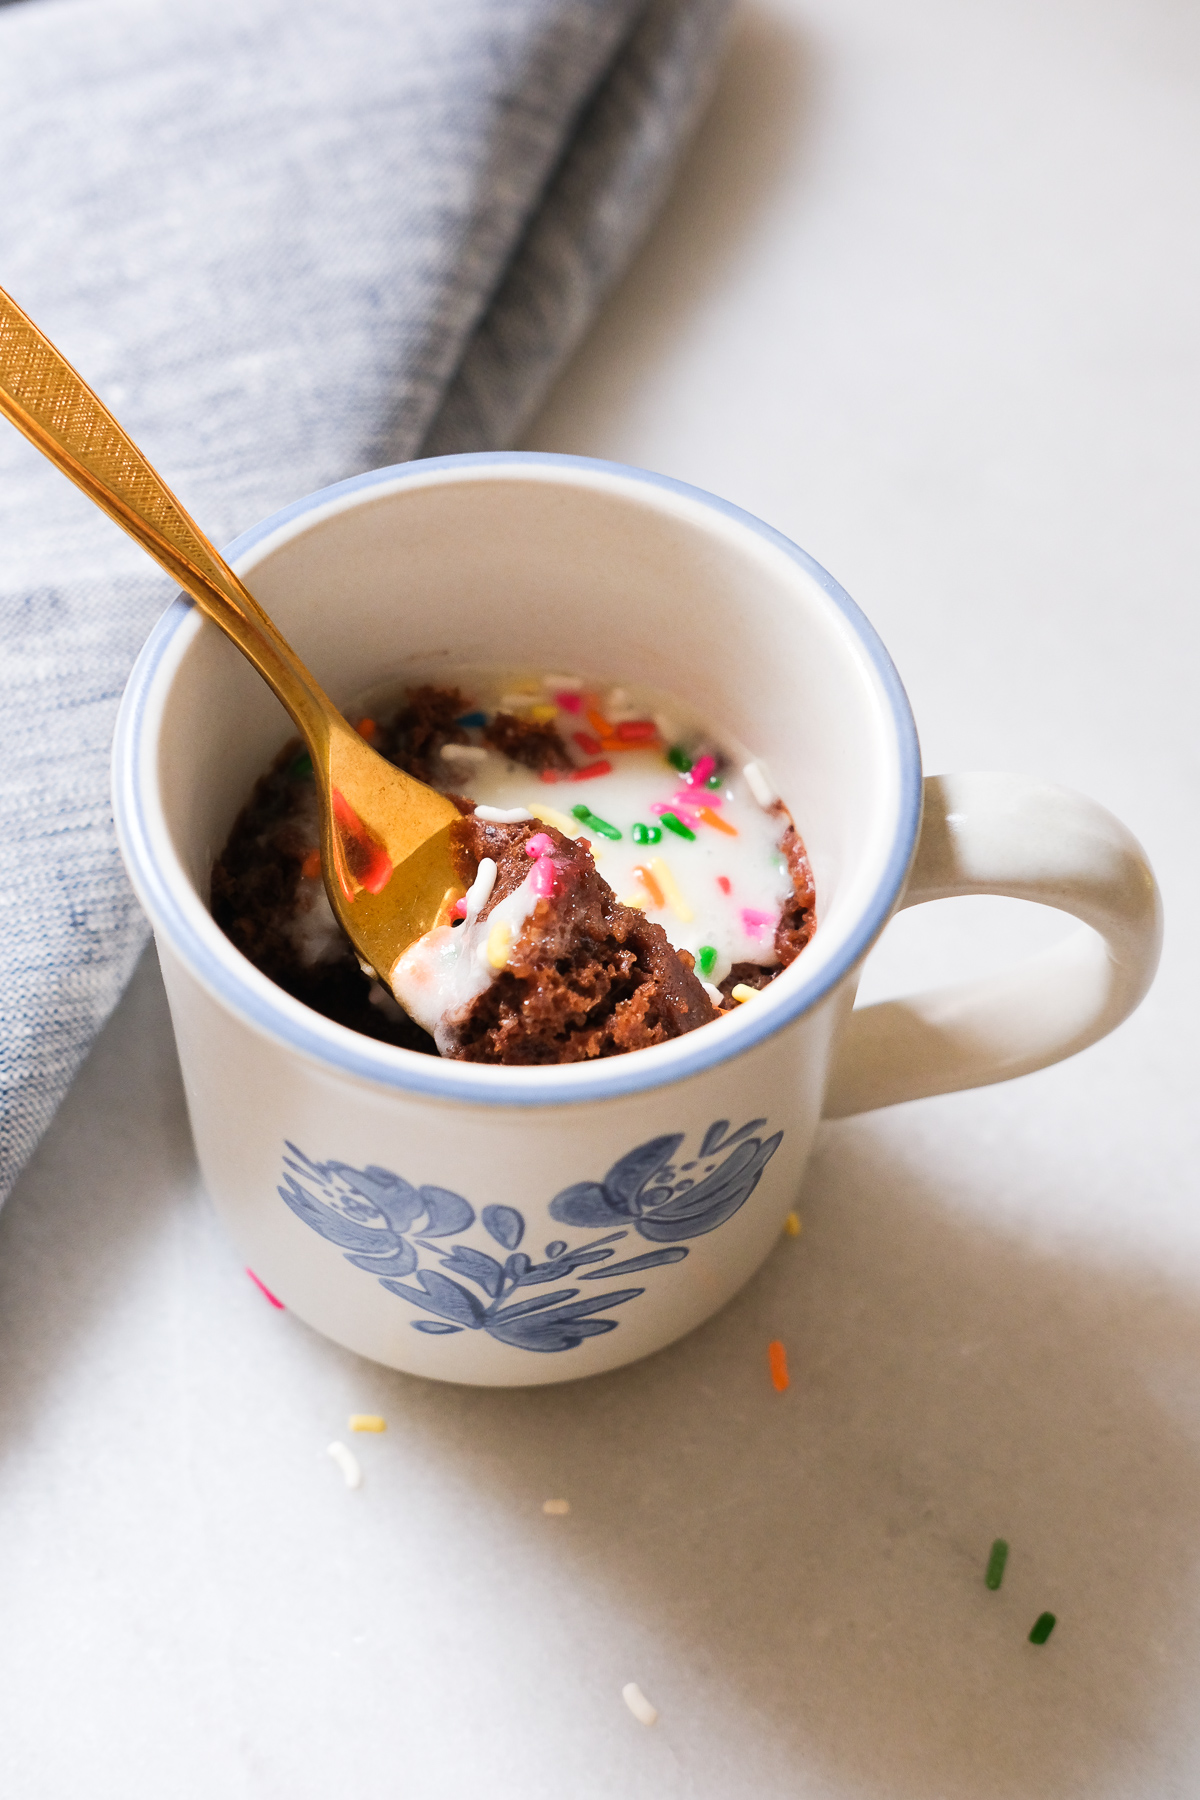 90-Second Chocolate Mug Cake Recipe